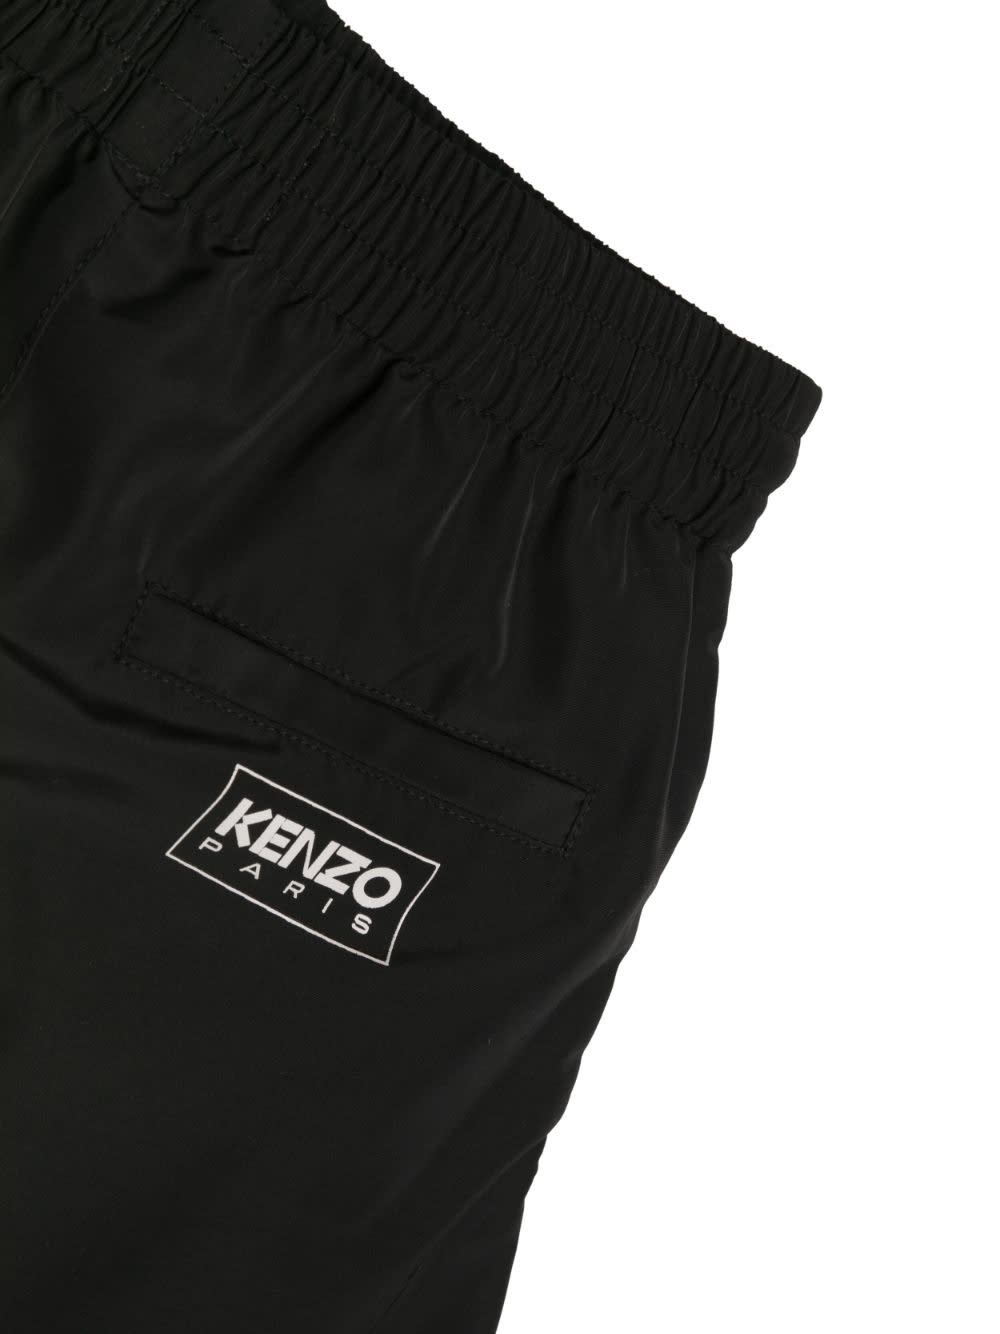 Shop Kenzo Sweatpants With Print In Black